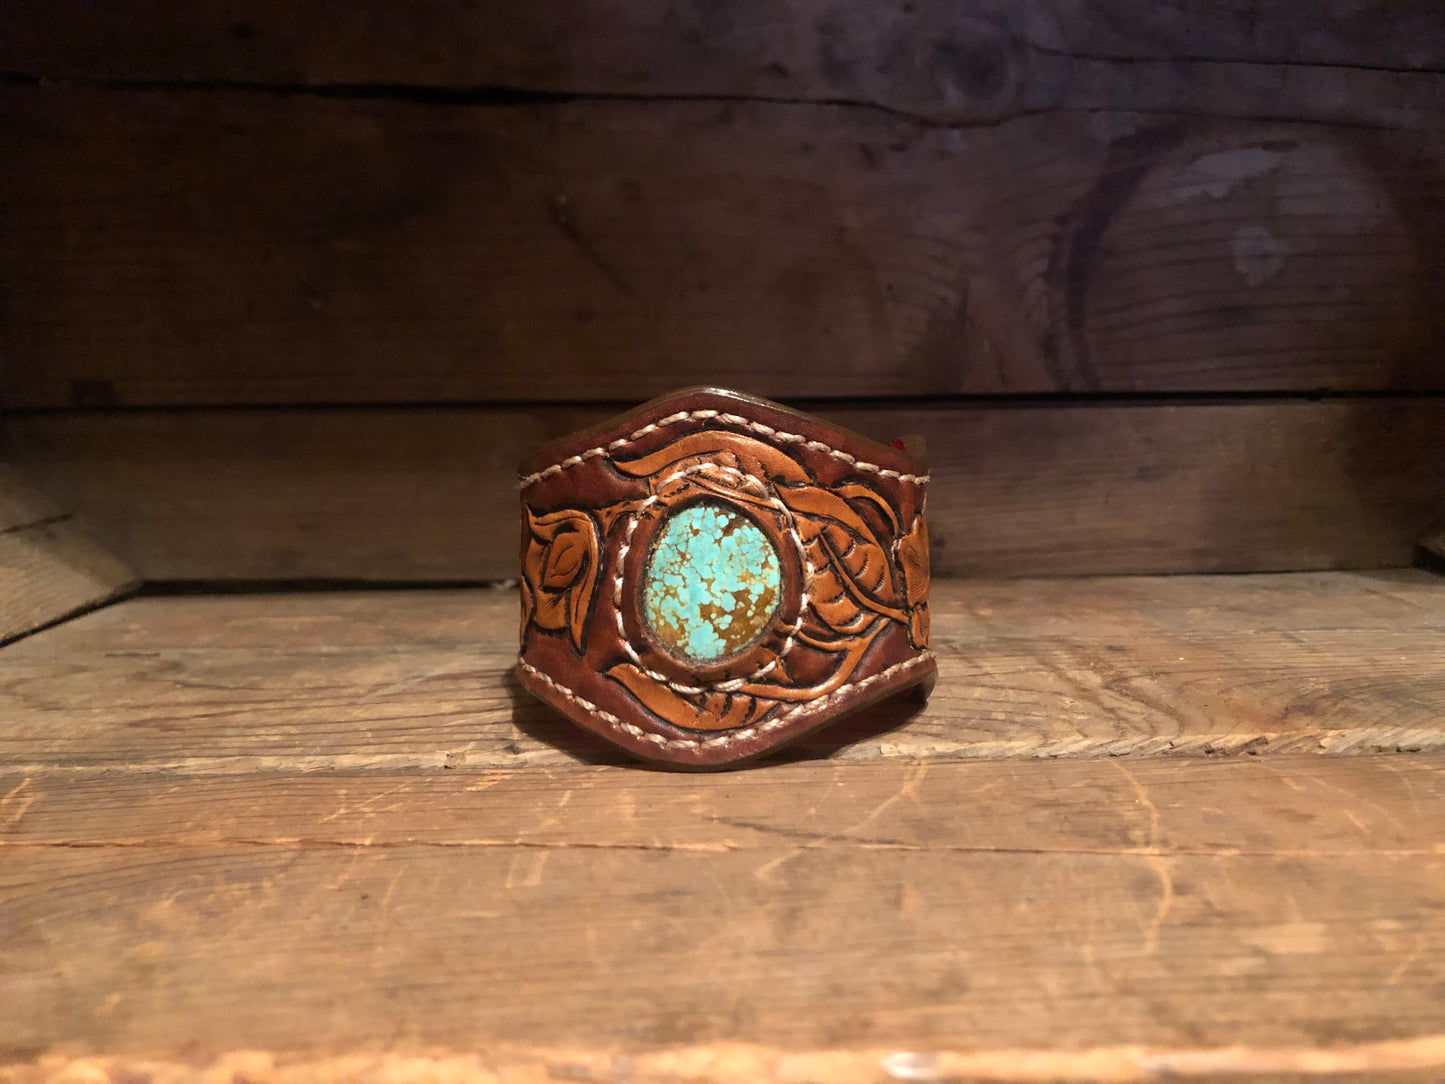 Leather Bracelet with Turquoise Stone